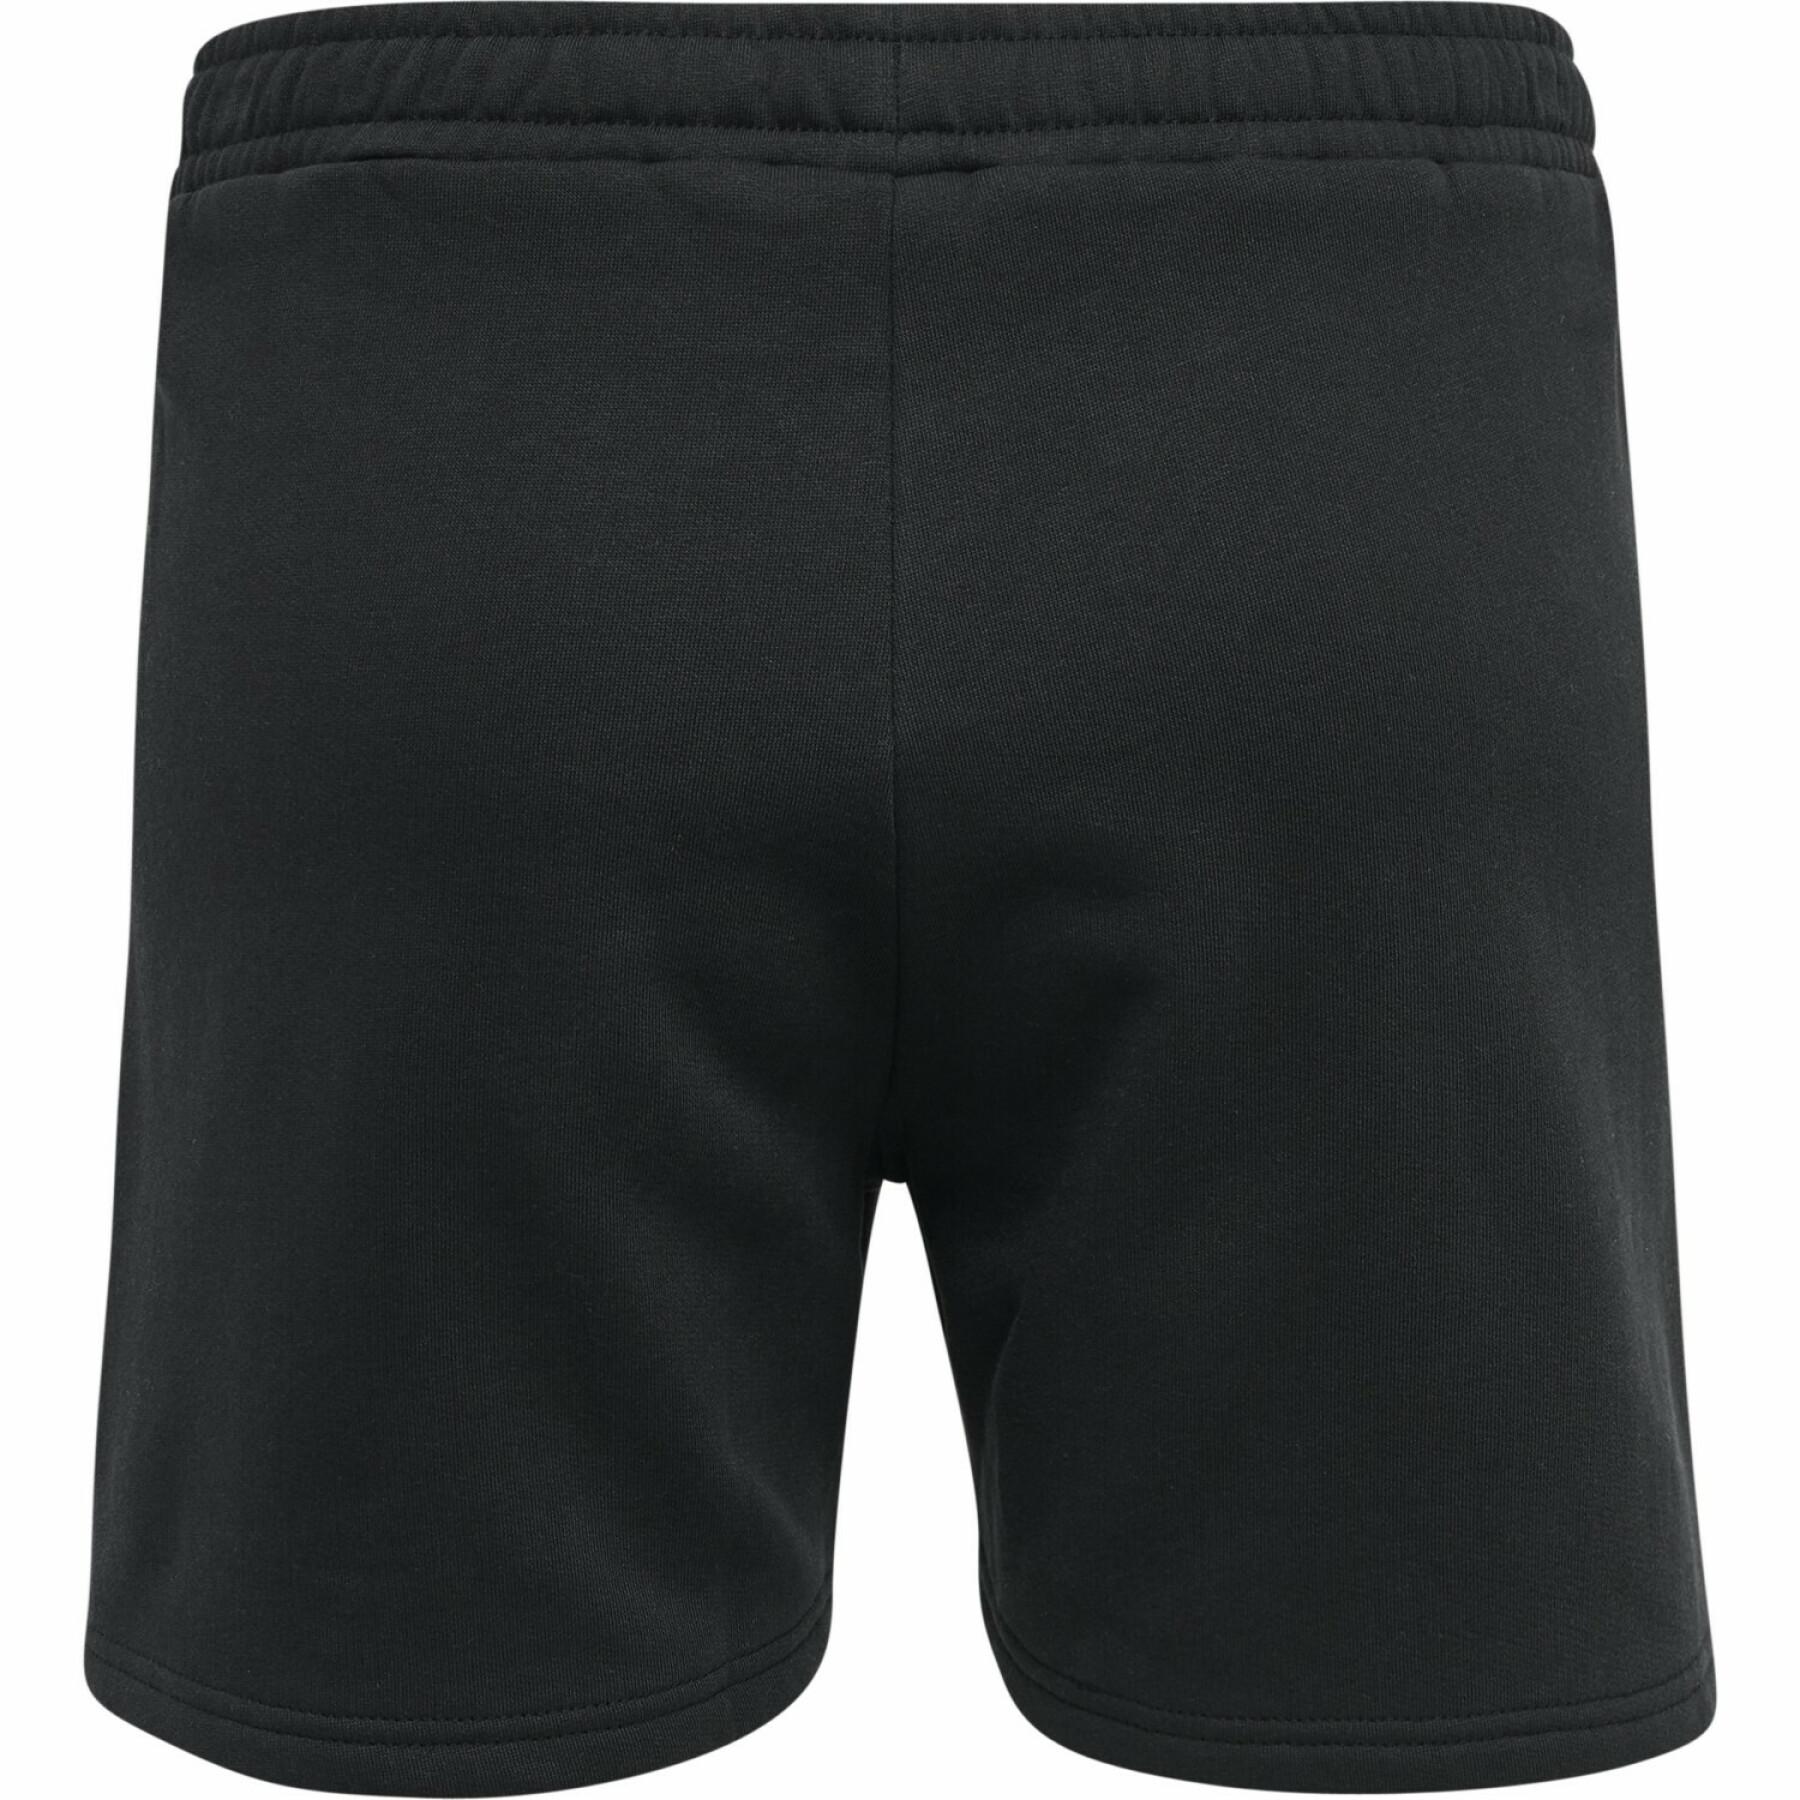 Women's shorts Hummel sweat